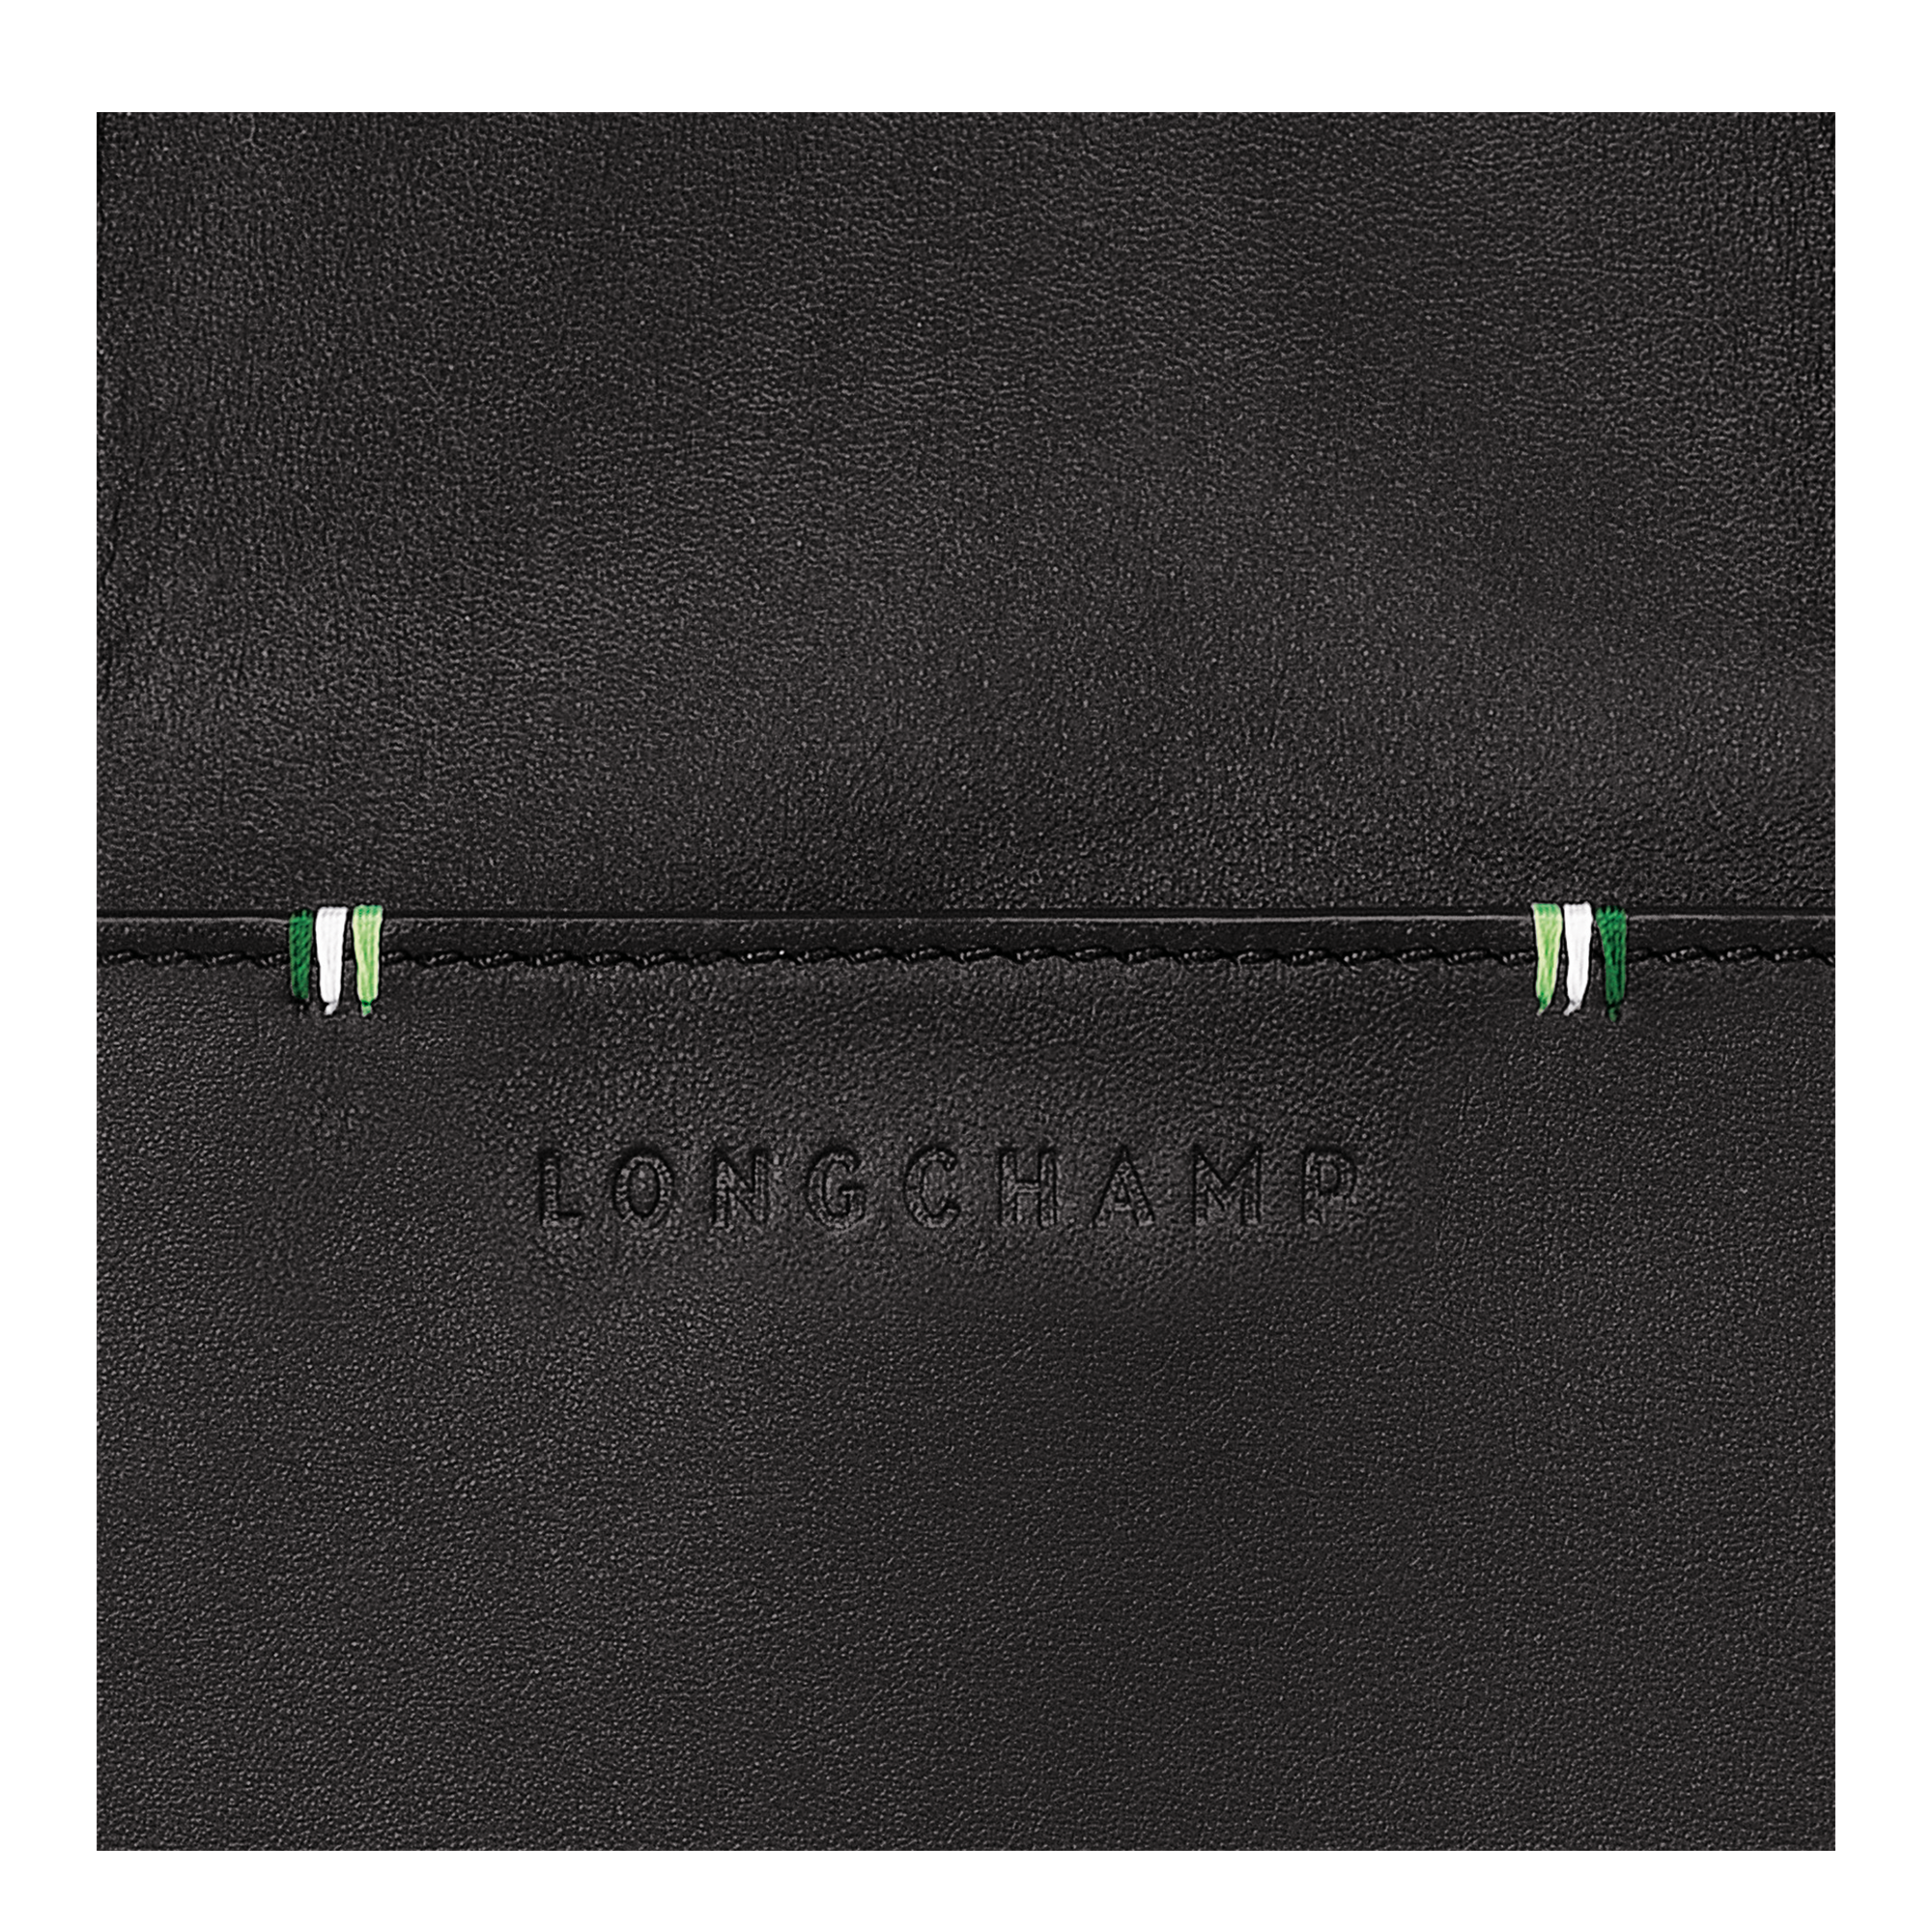 Longchamp sur Seine Briefcase S, Black